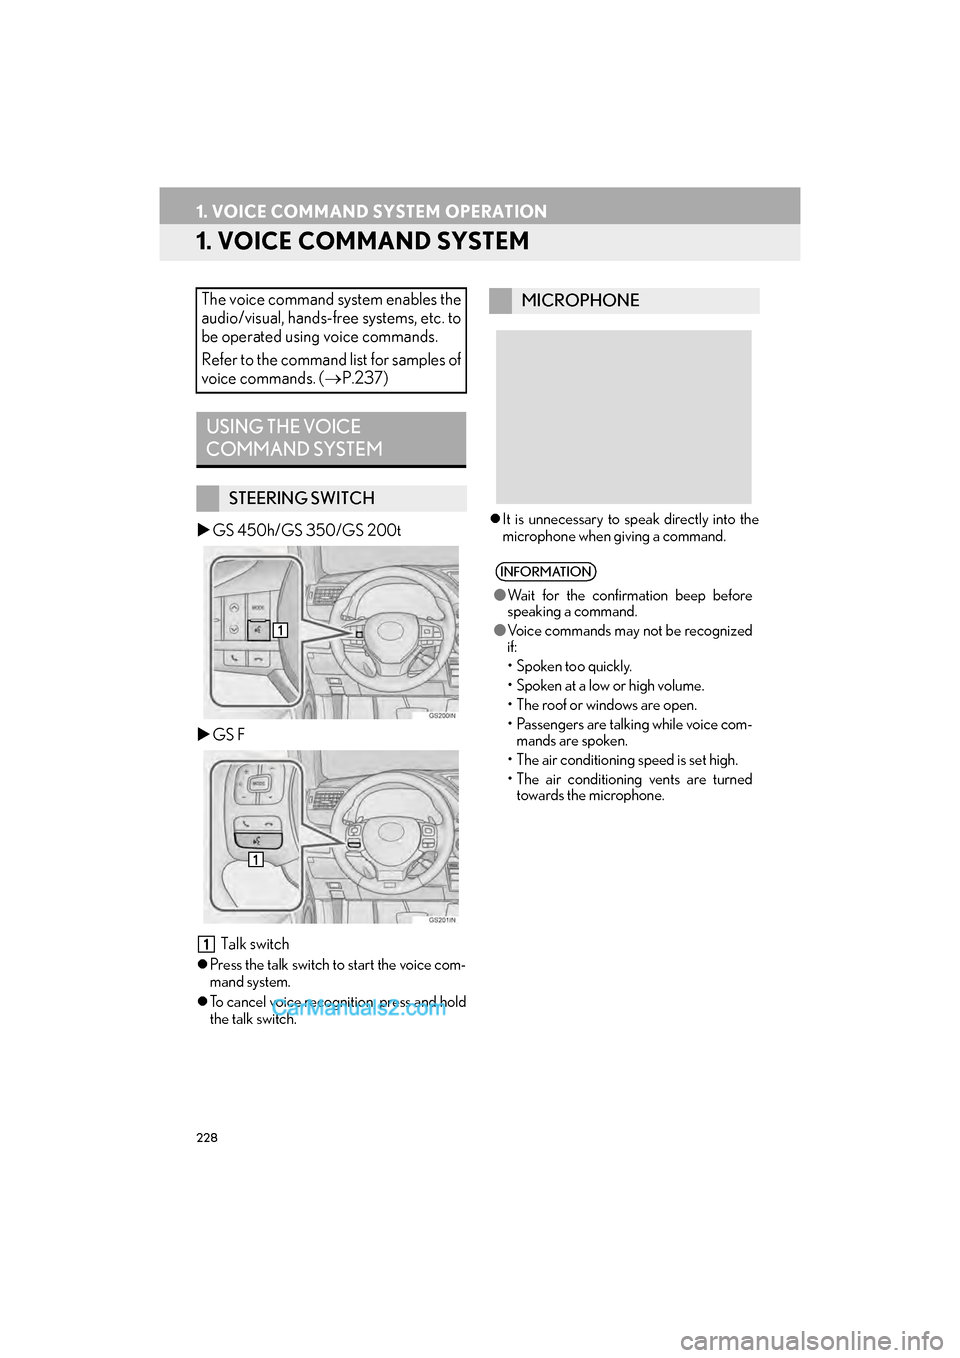 Lexus GS F 2017  Navigation Manual 228
GS_Navi+MM_OM30F99U_(U)16.07.11     14:00
1. VOICE COMMAND SYSTEM OPERATION
1. VOICE COMMAND SYSTEM
�XGS 450h/GS 350/GS 200t
�X GS F
 Talk switch
�z Press the talk switch to start the voice com-
m